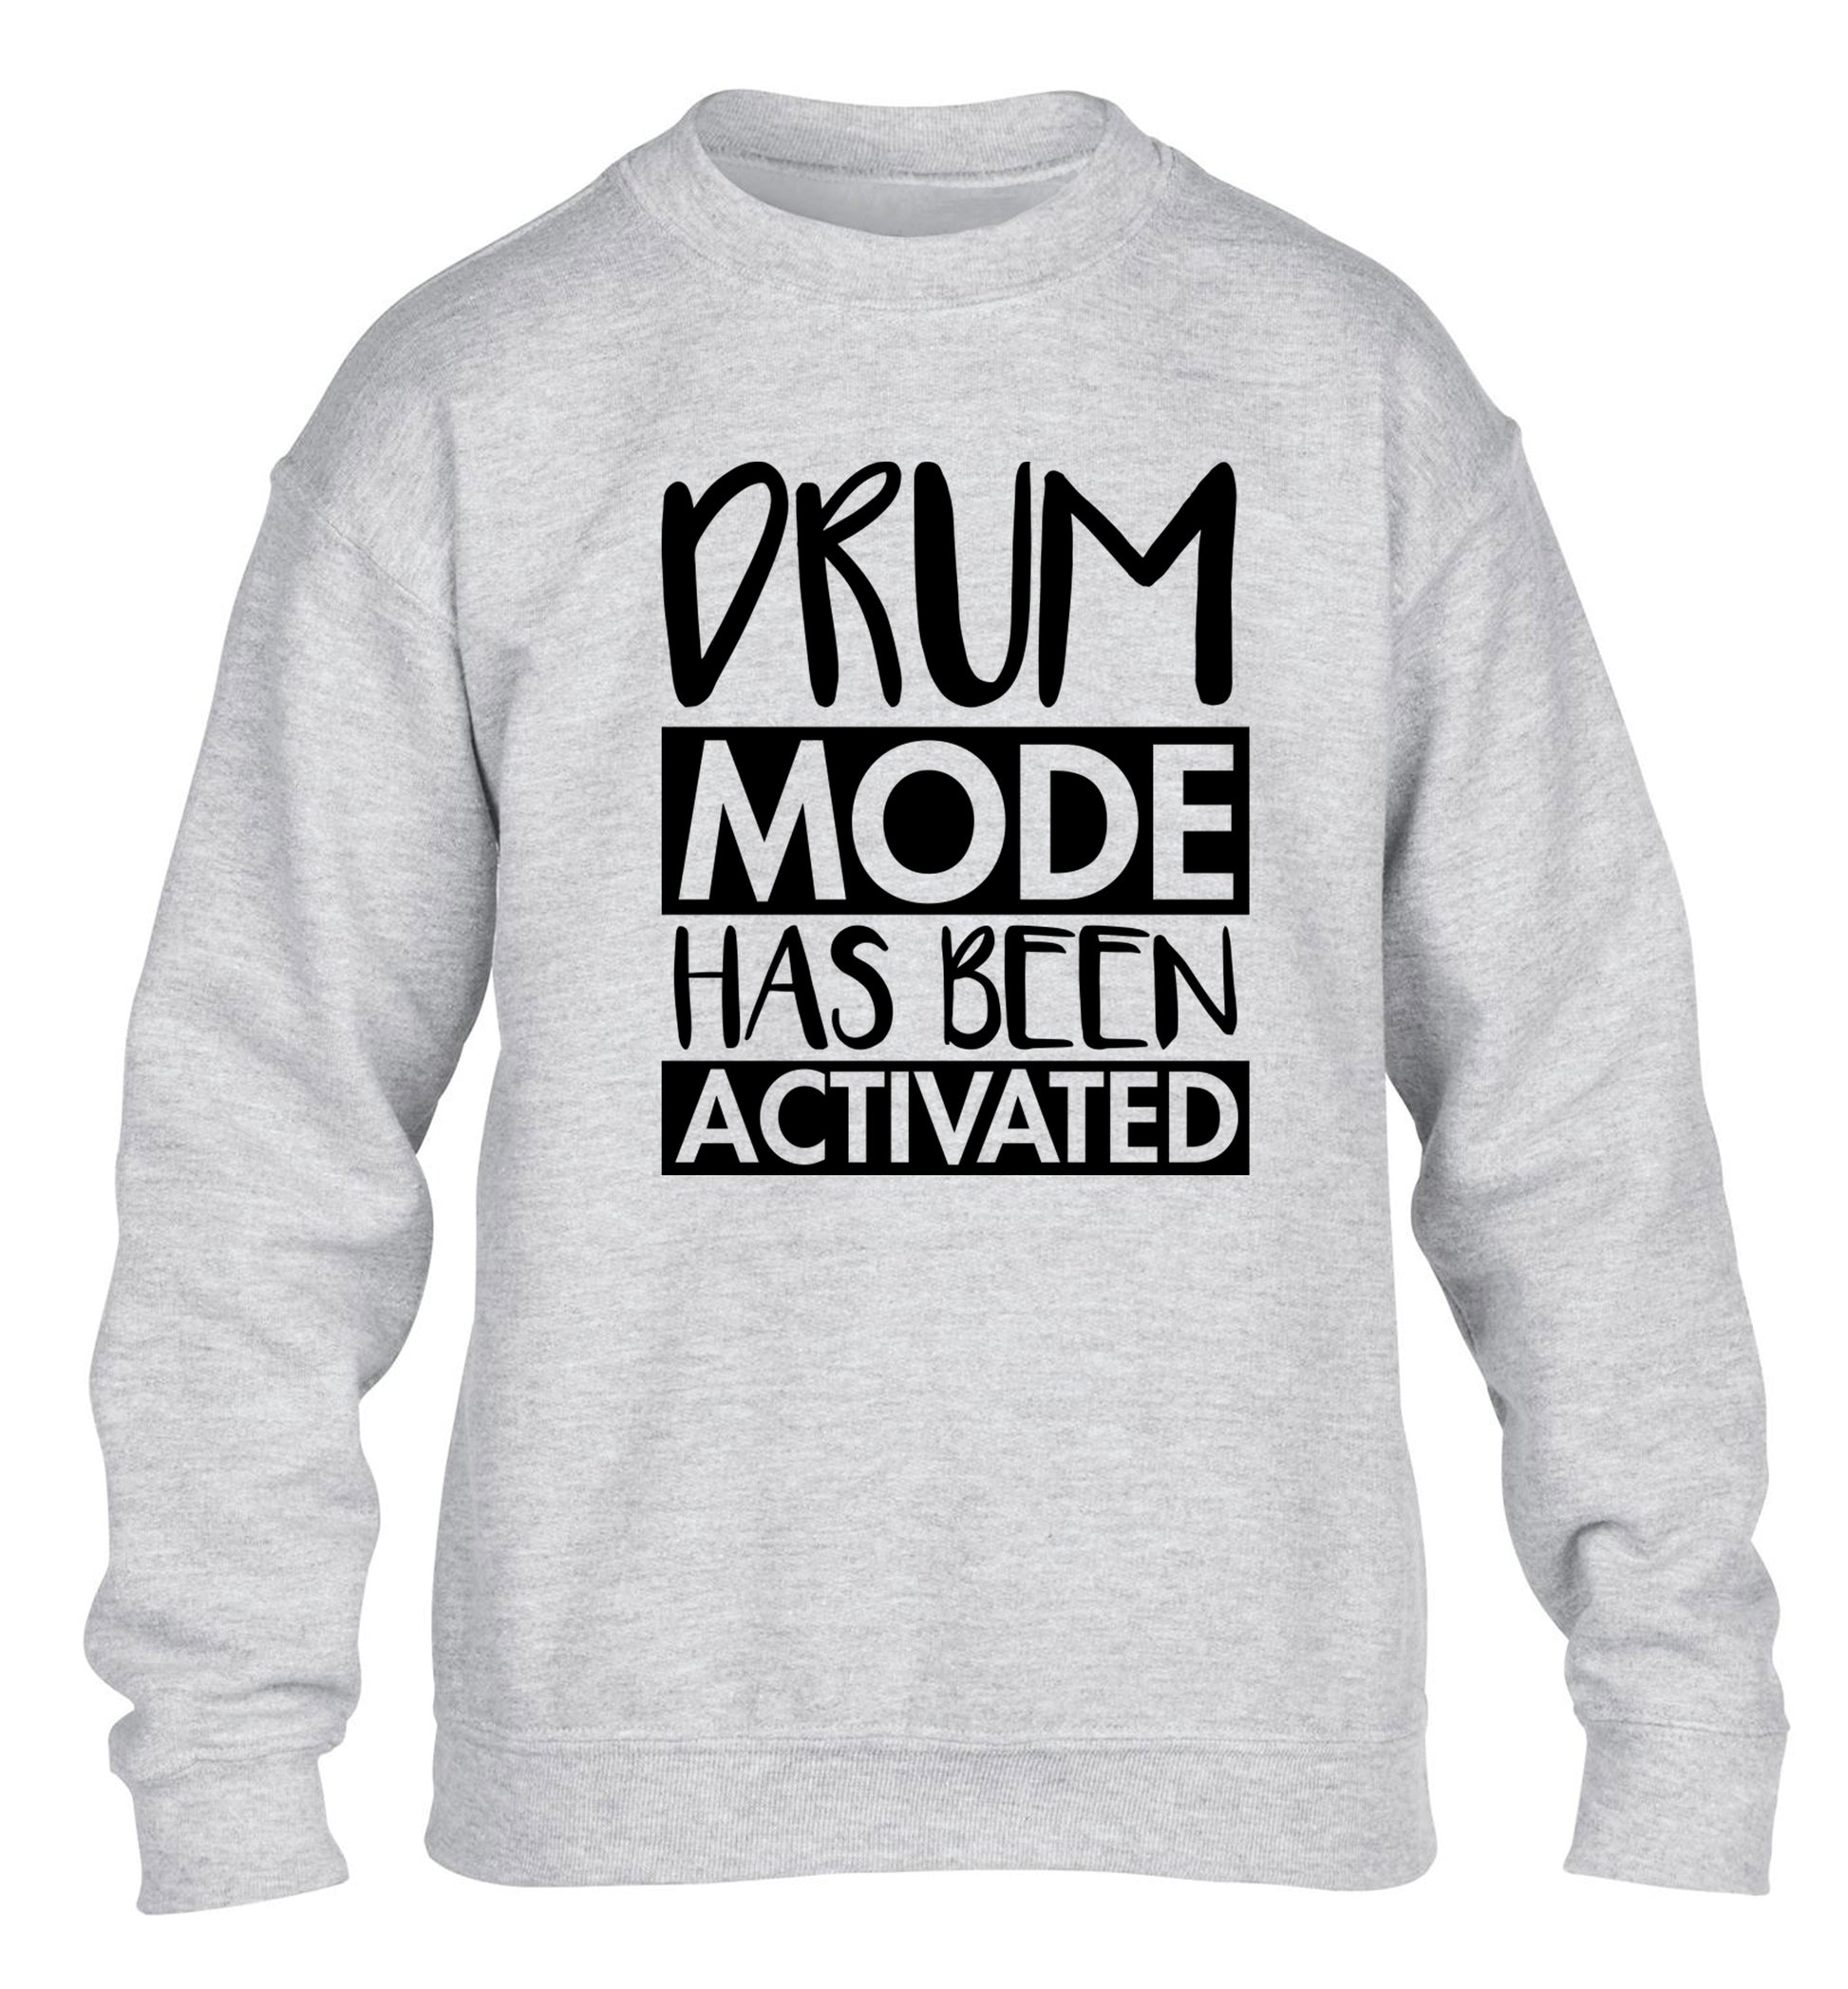 Drum mode activated children's grey sweater 12-14 Years